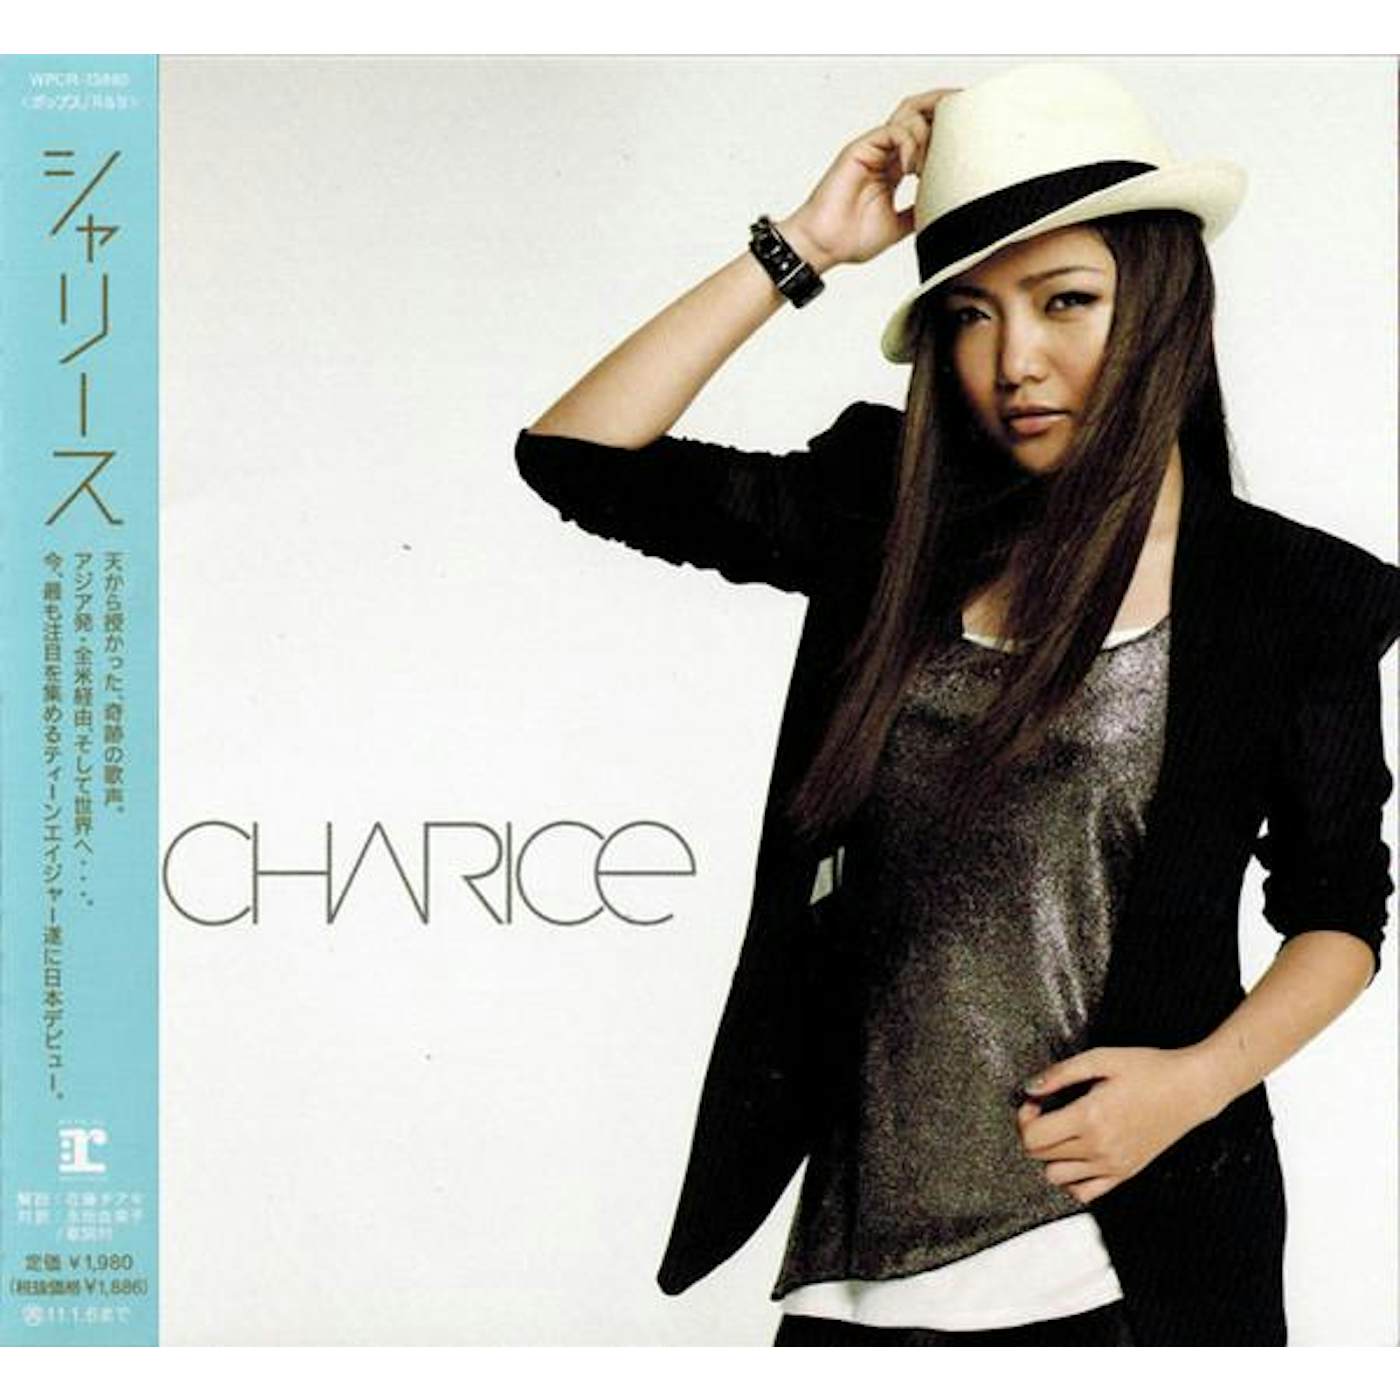 CHARICE CD